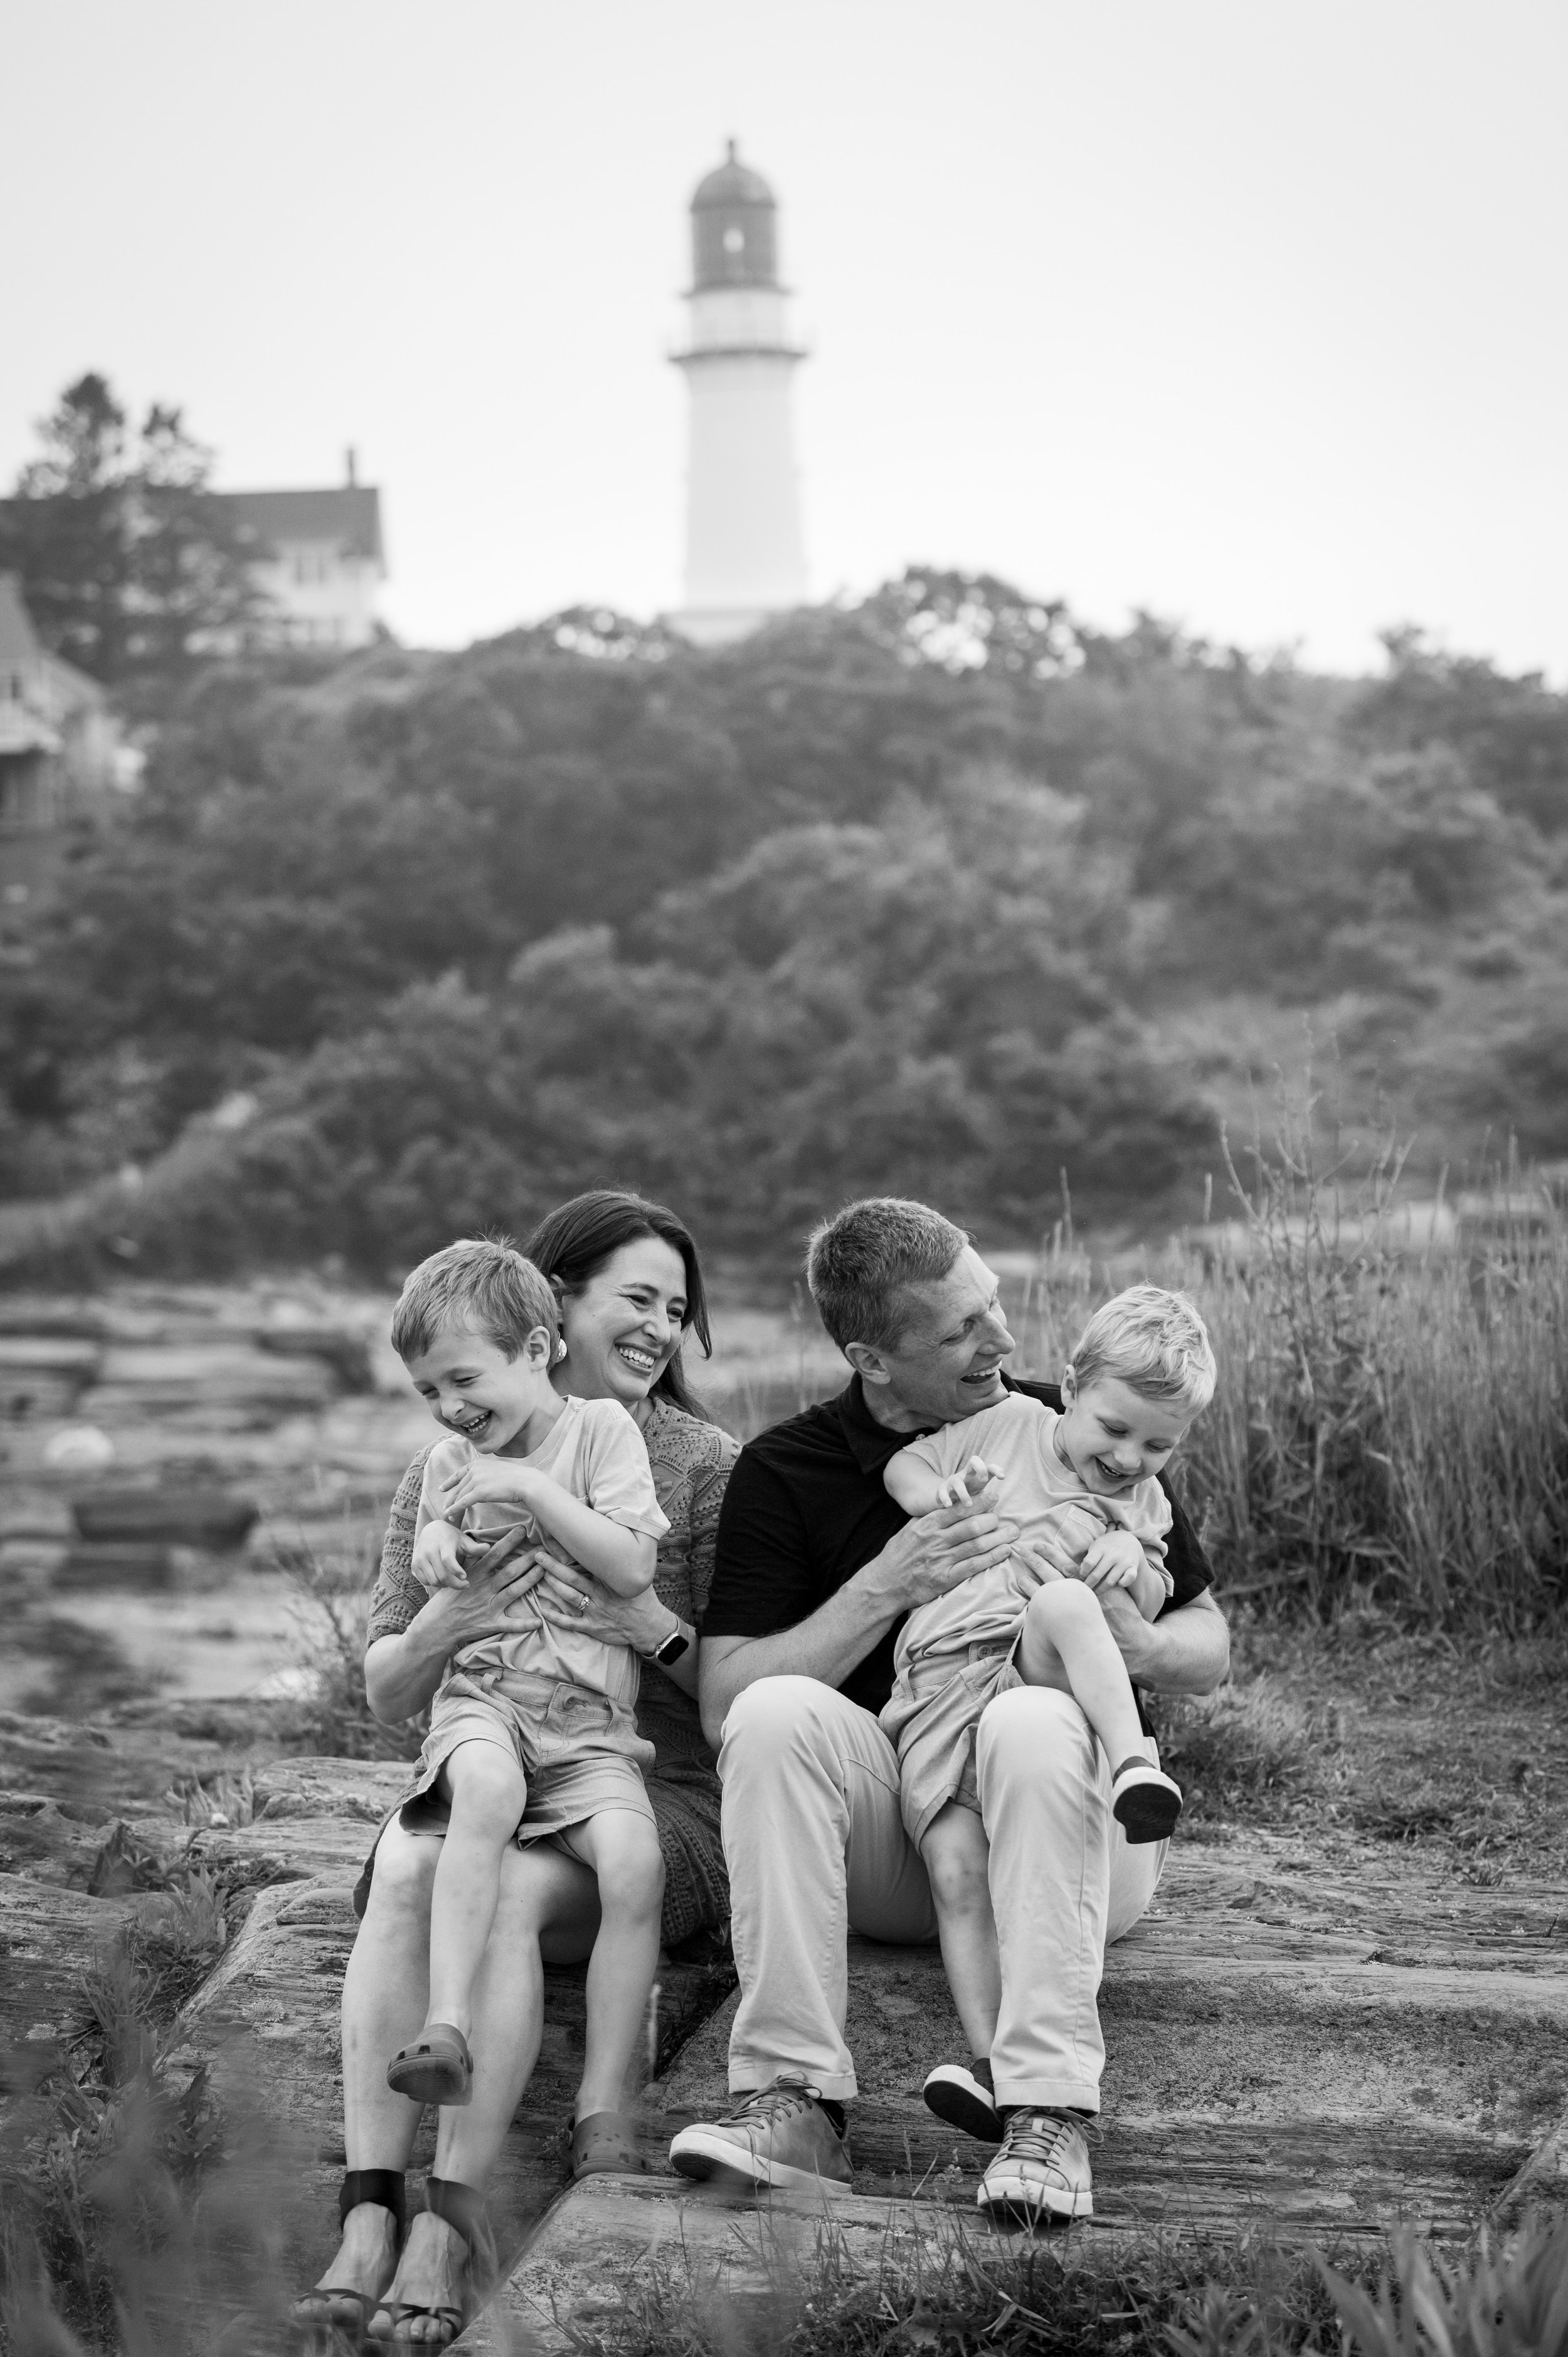 lindsay murphy photography | portland maine family photographer | cape elizabeth lighthouse family laughing.jpg